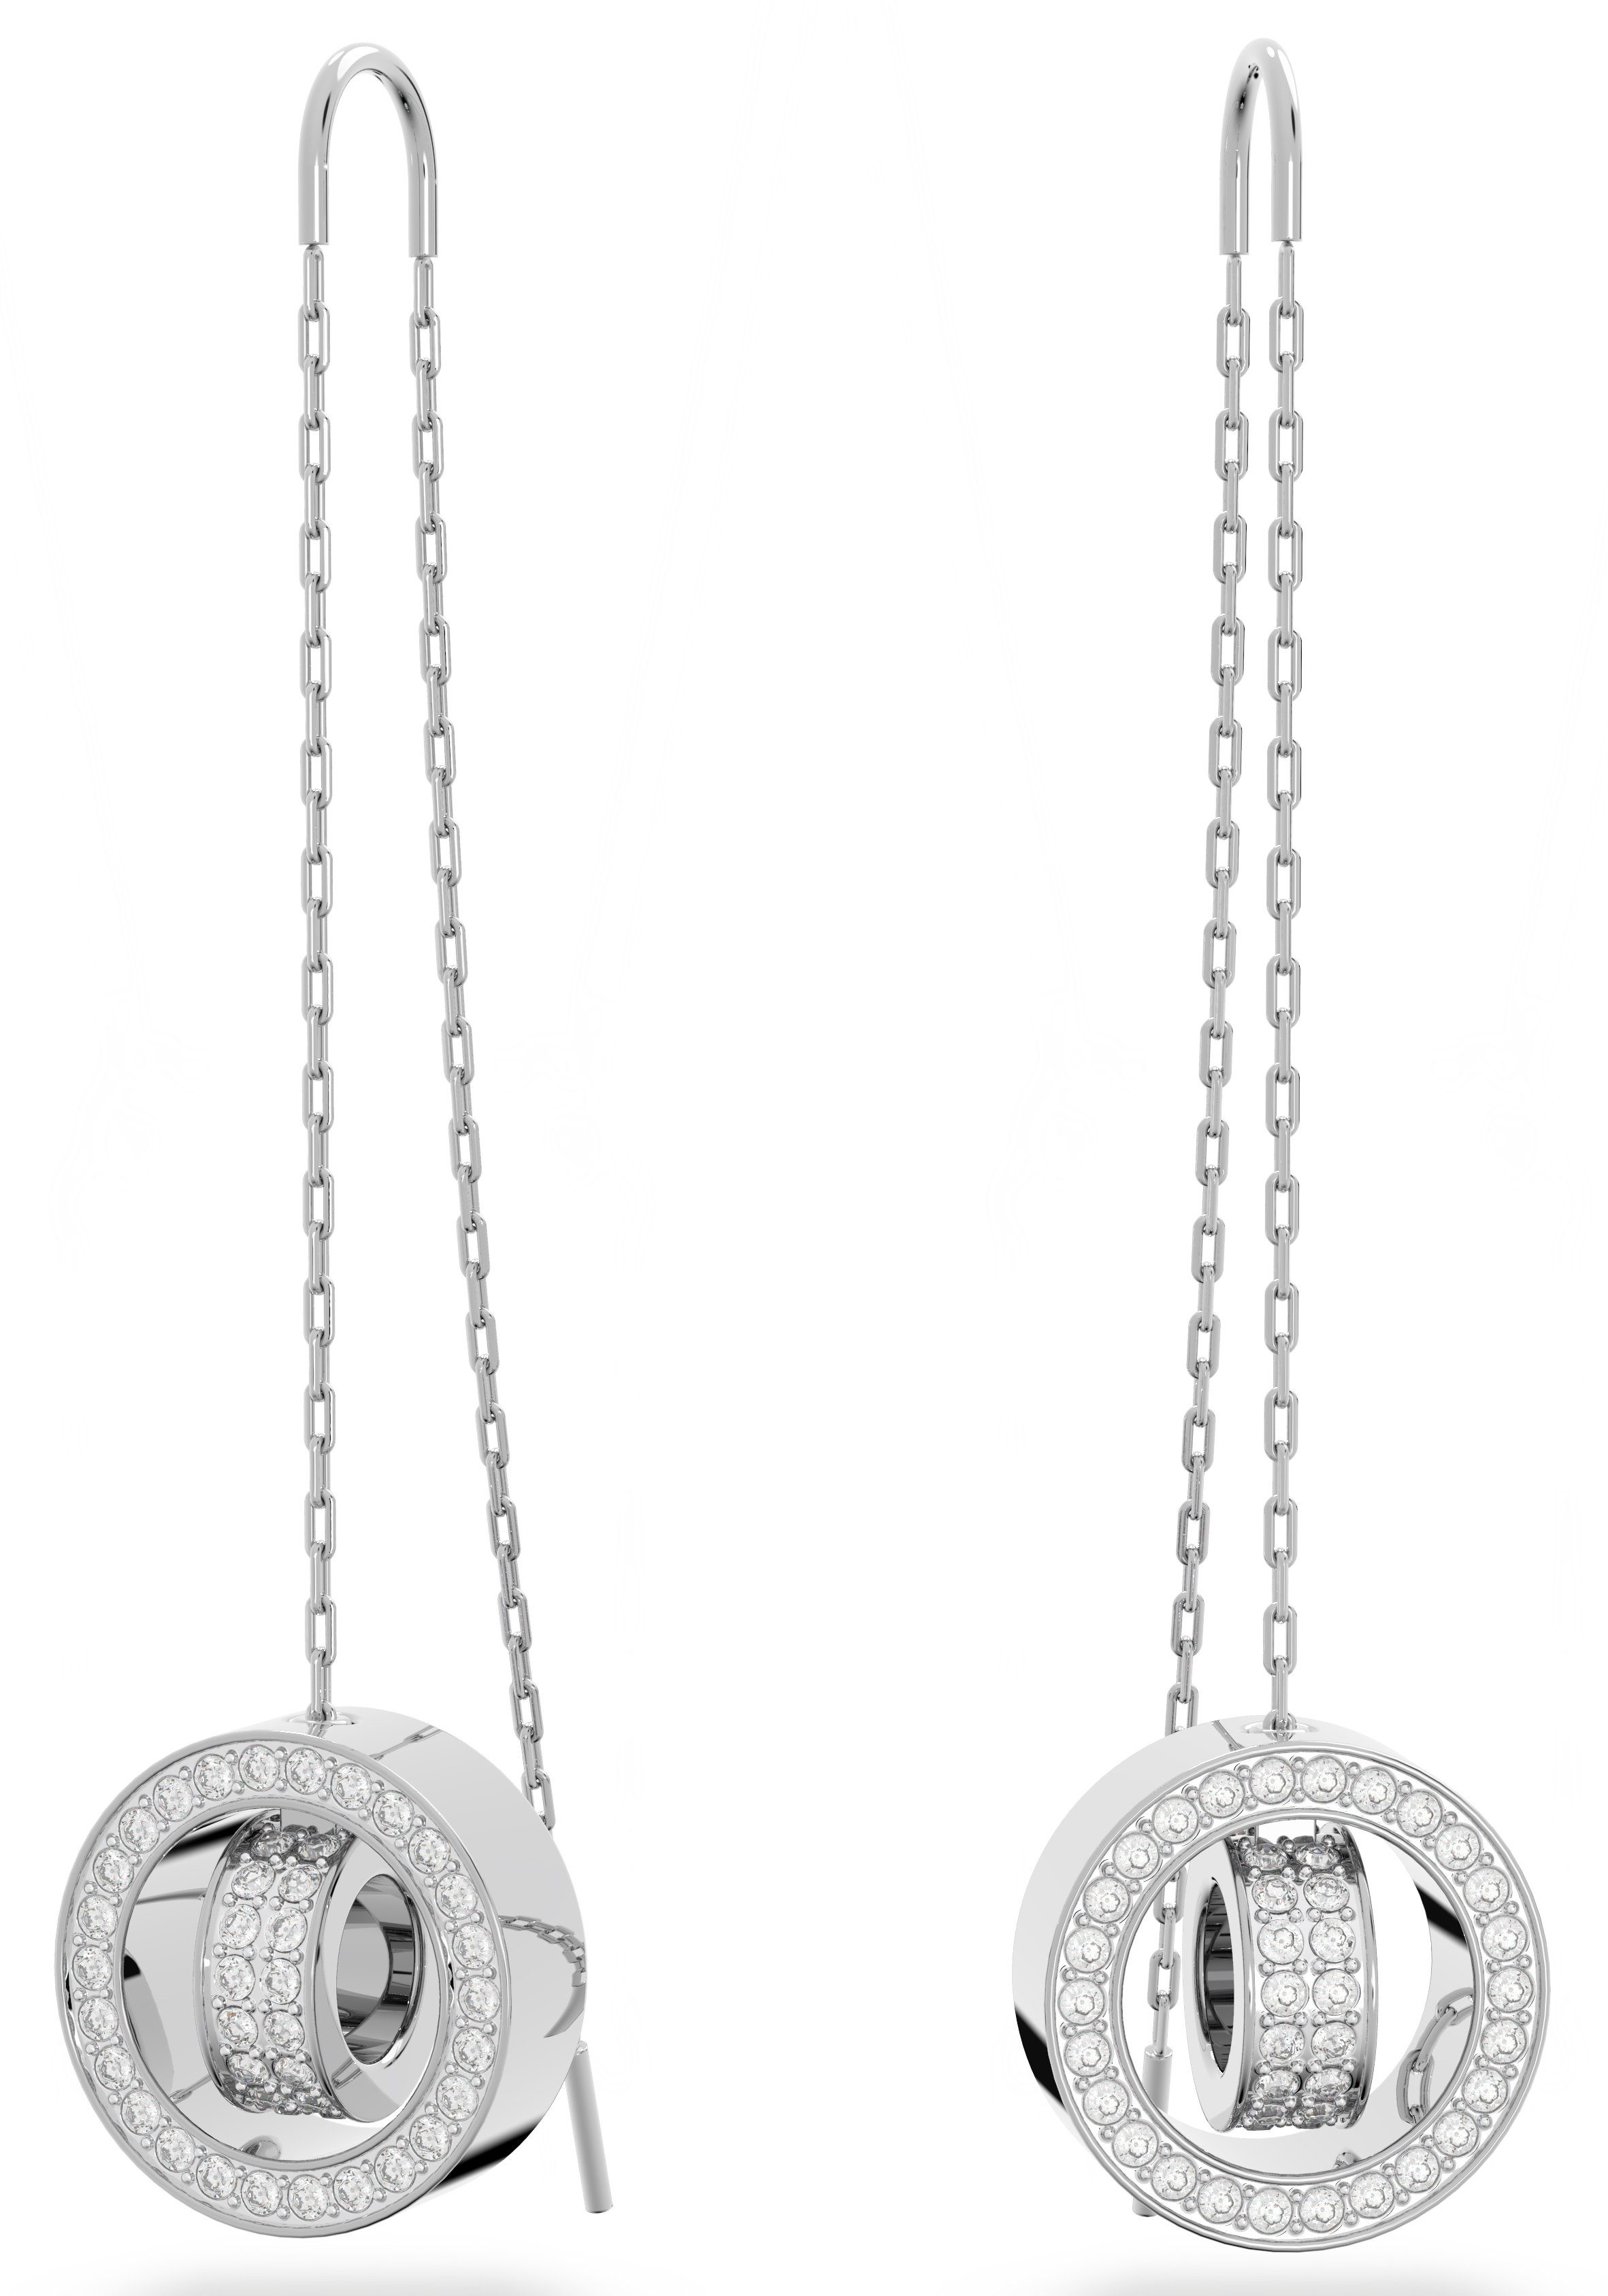 Swarovski Paar Ohrhänger Hollow Drop-Ohrhänger, Lang, 5636435, 5636504, mit Swarovski® Kristall metallfarben-kristallweiß